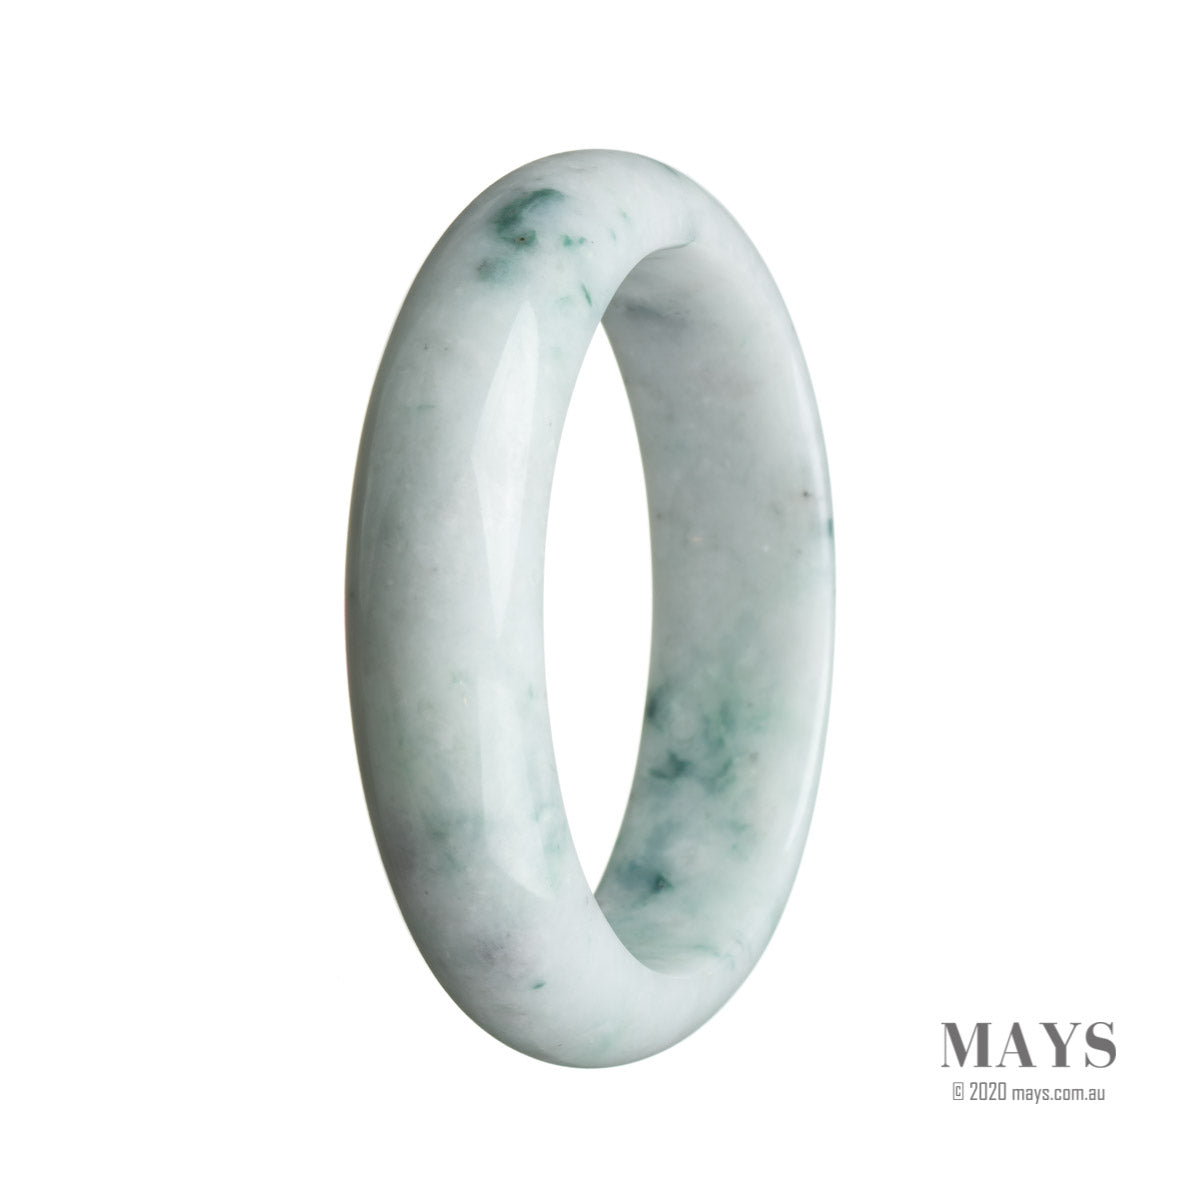 A half moon shaped jade bangle bracelet, made of authentic natural white Burma jade.